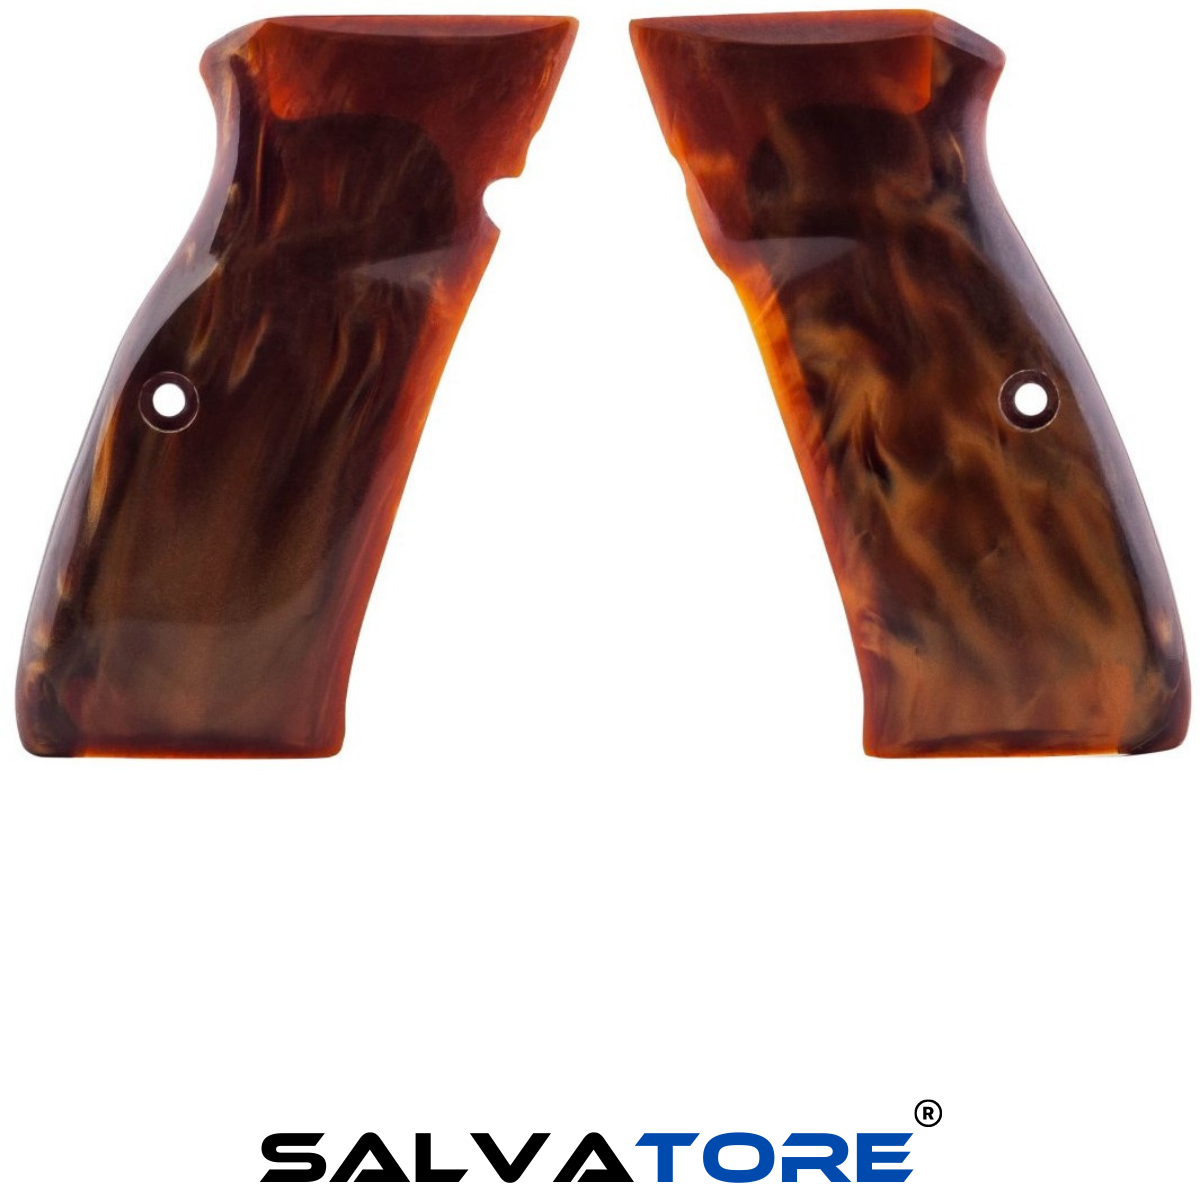 Salvatore Pistol Grips Revolver Grips For CZ Handmade Acrylic Gun Accessories Hunting Shooting